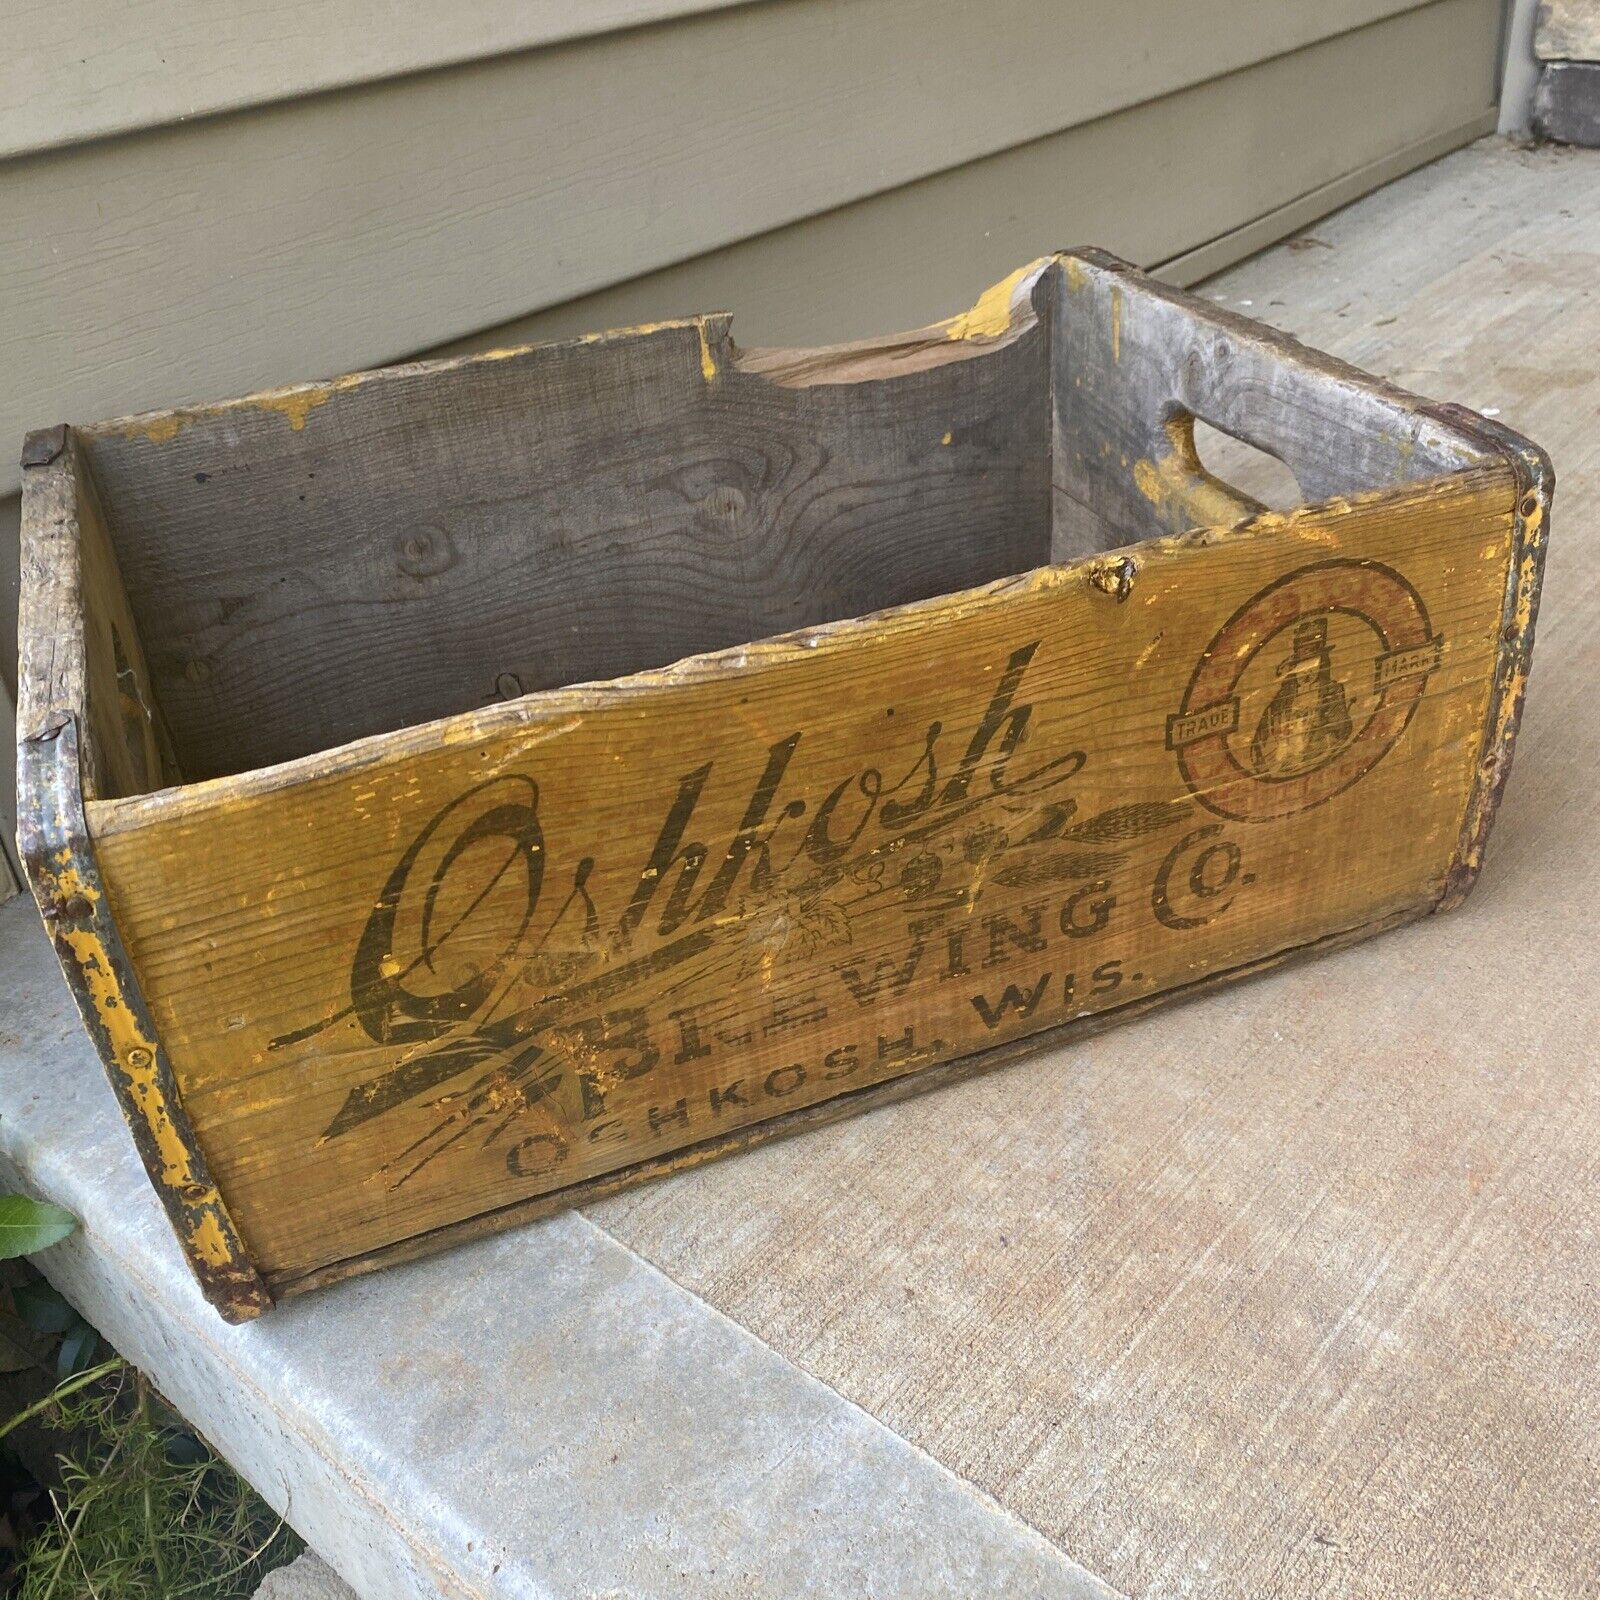 Oshkosh Brewing Company Oshkosh Wisconsin 1930’s wood crate 19”x13”x8”